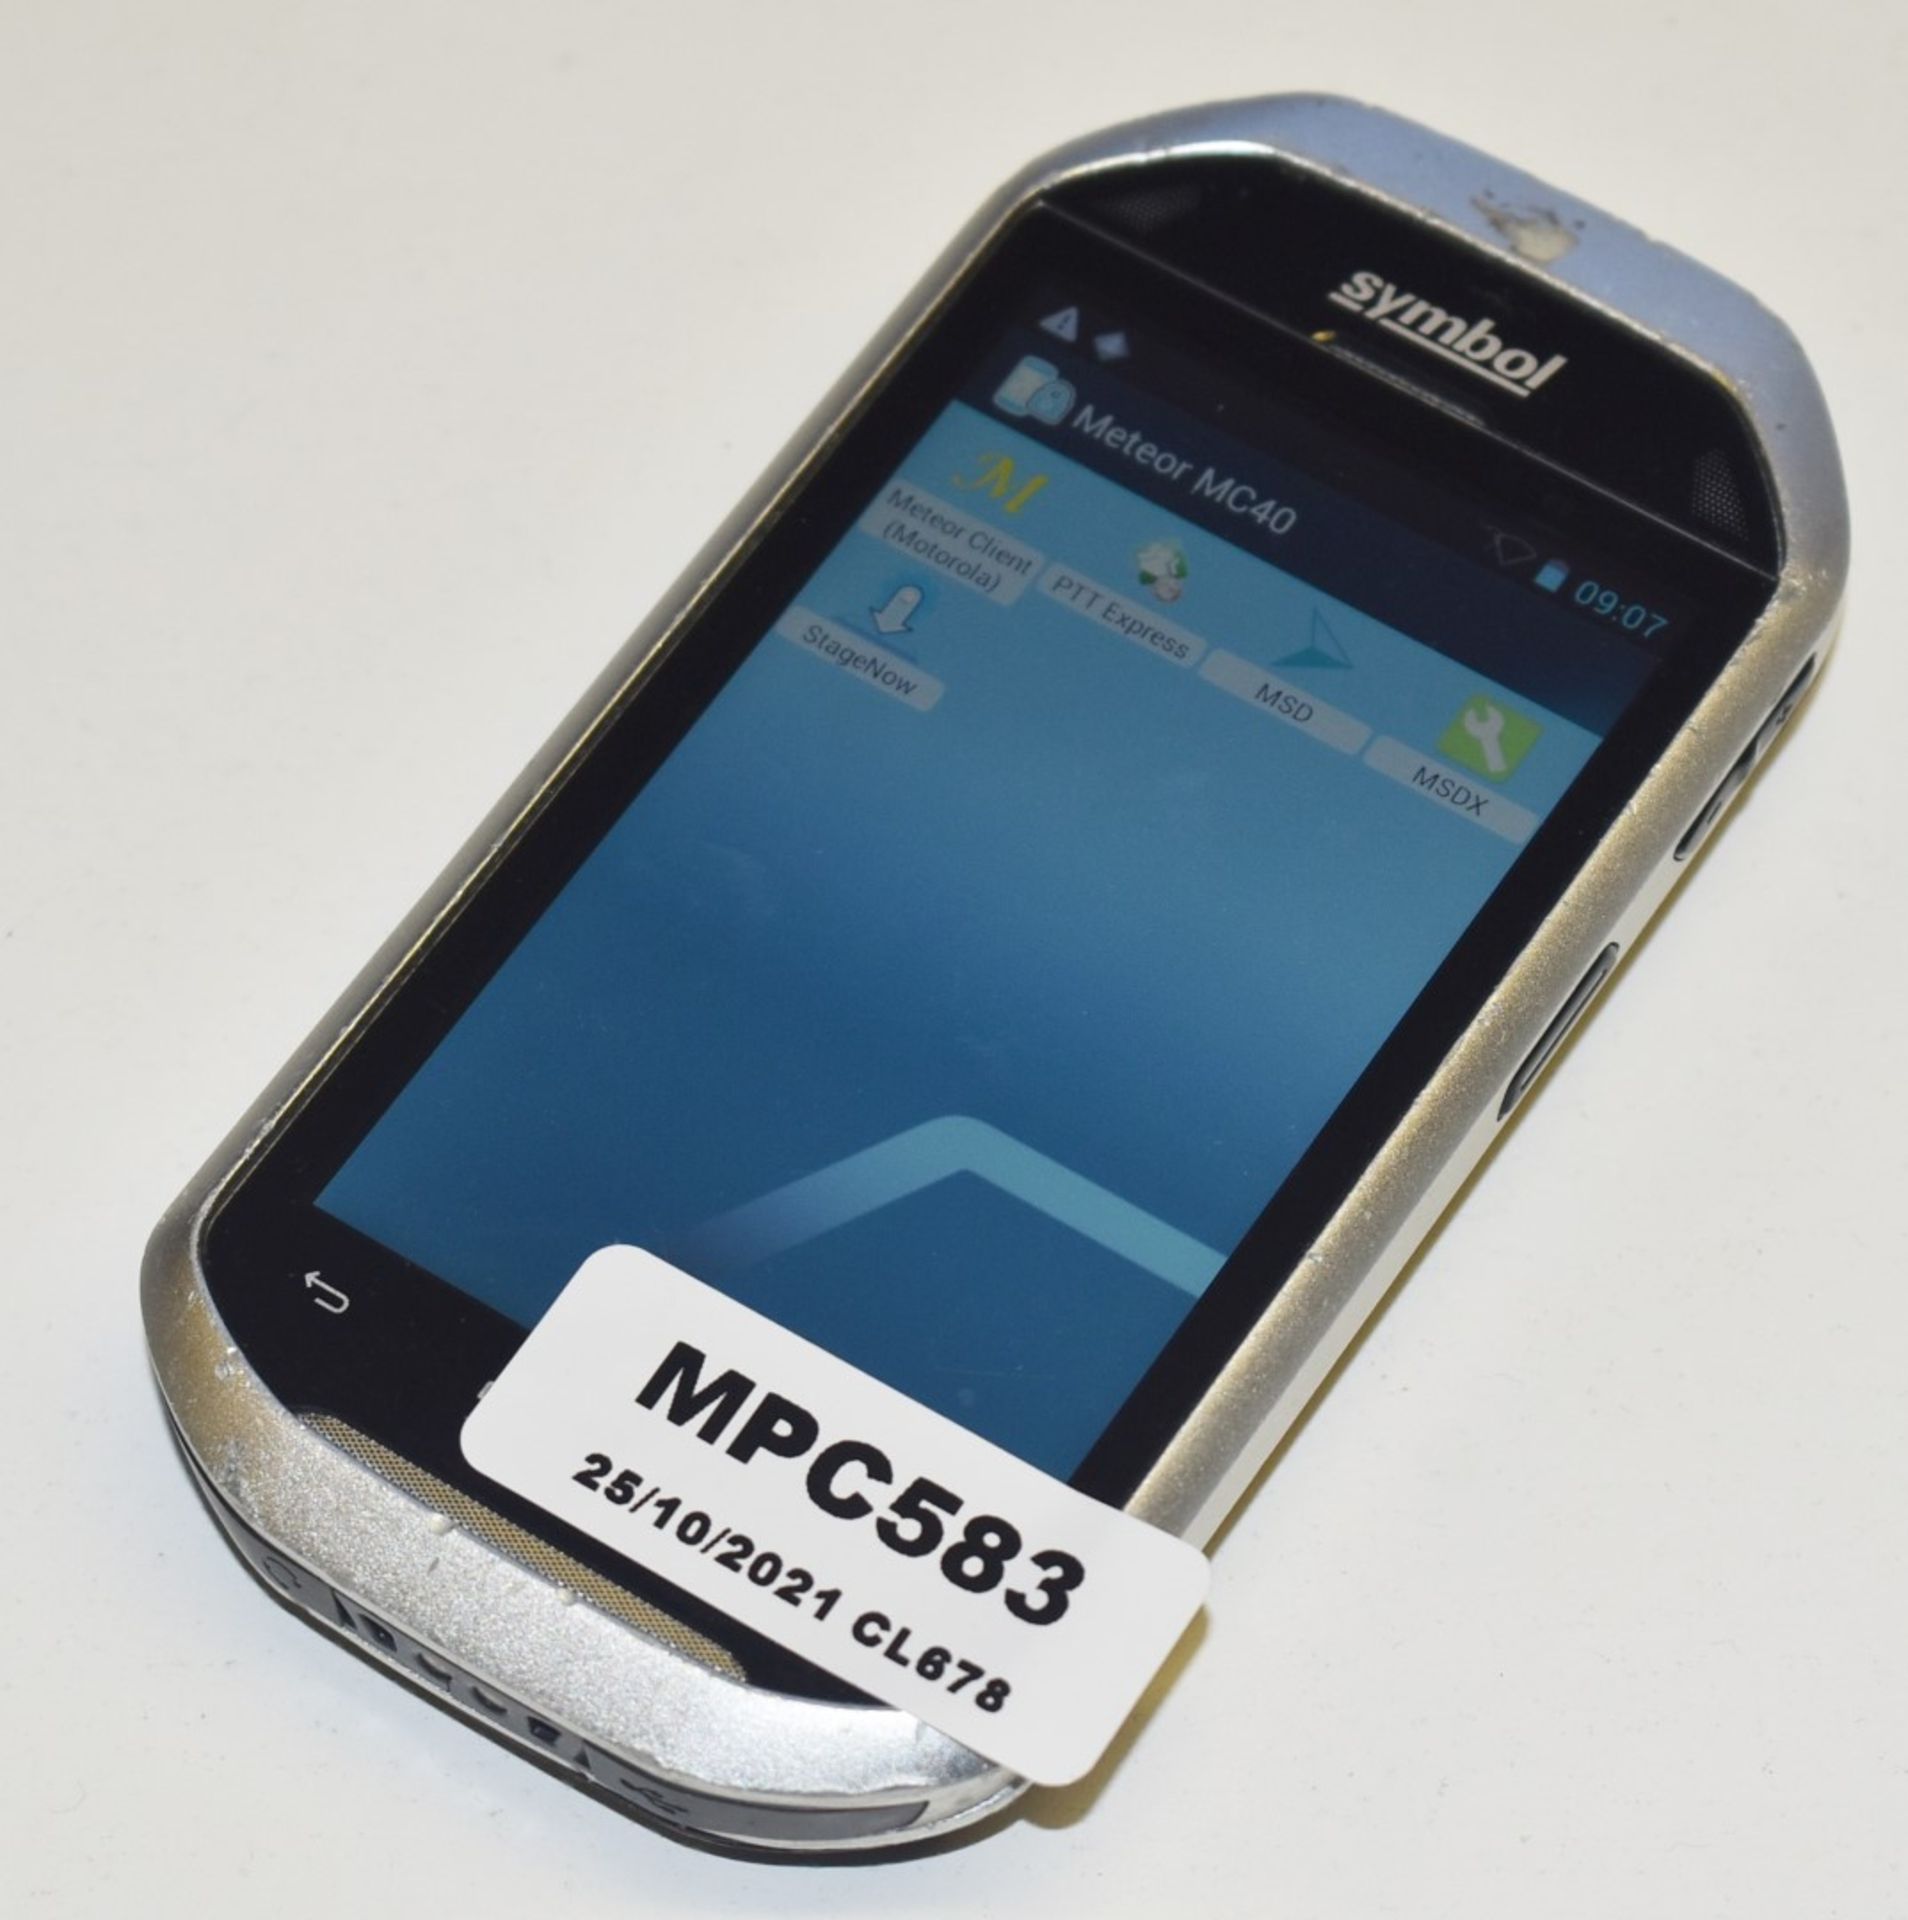 1 x Zebra Symbol MC40 1D 2D Barcode Scanner PDA Handheld Compute - Ref: MPC583 CG - CL678 -